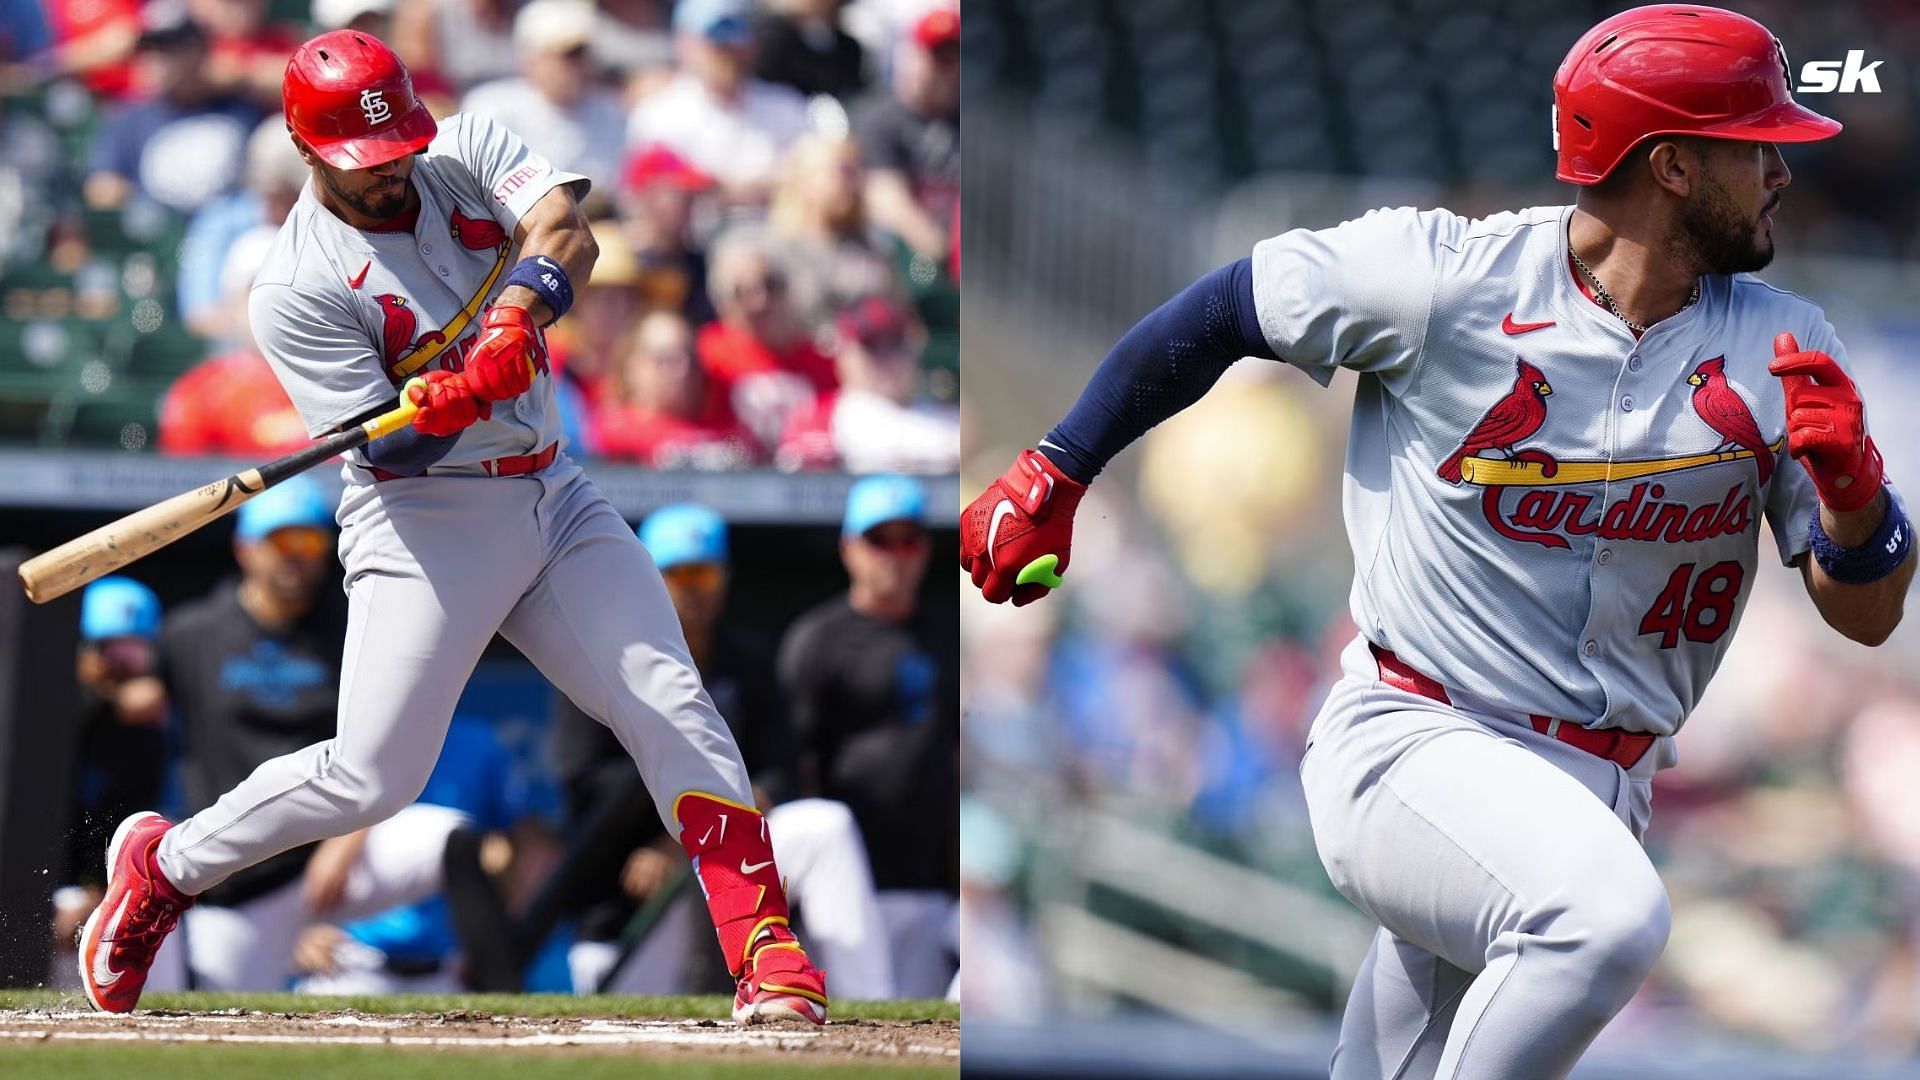 WATCH: Ivan Herrera smashes first MLB home run during Cardinals